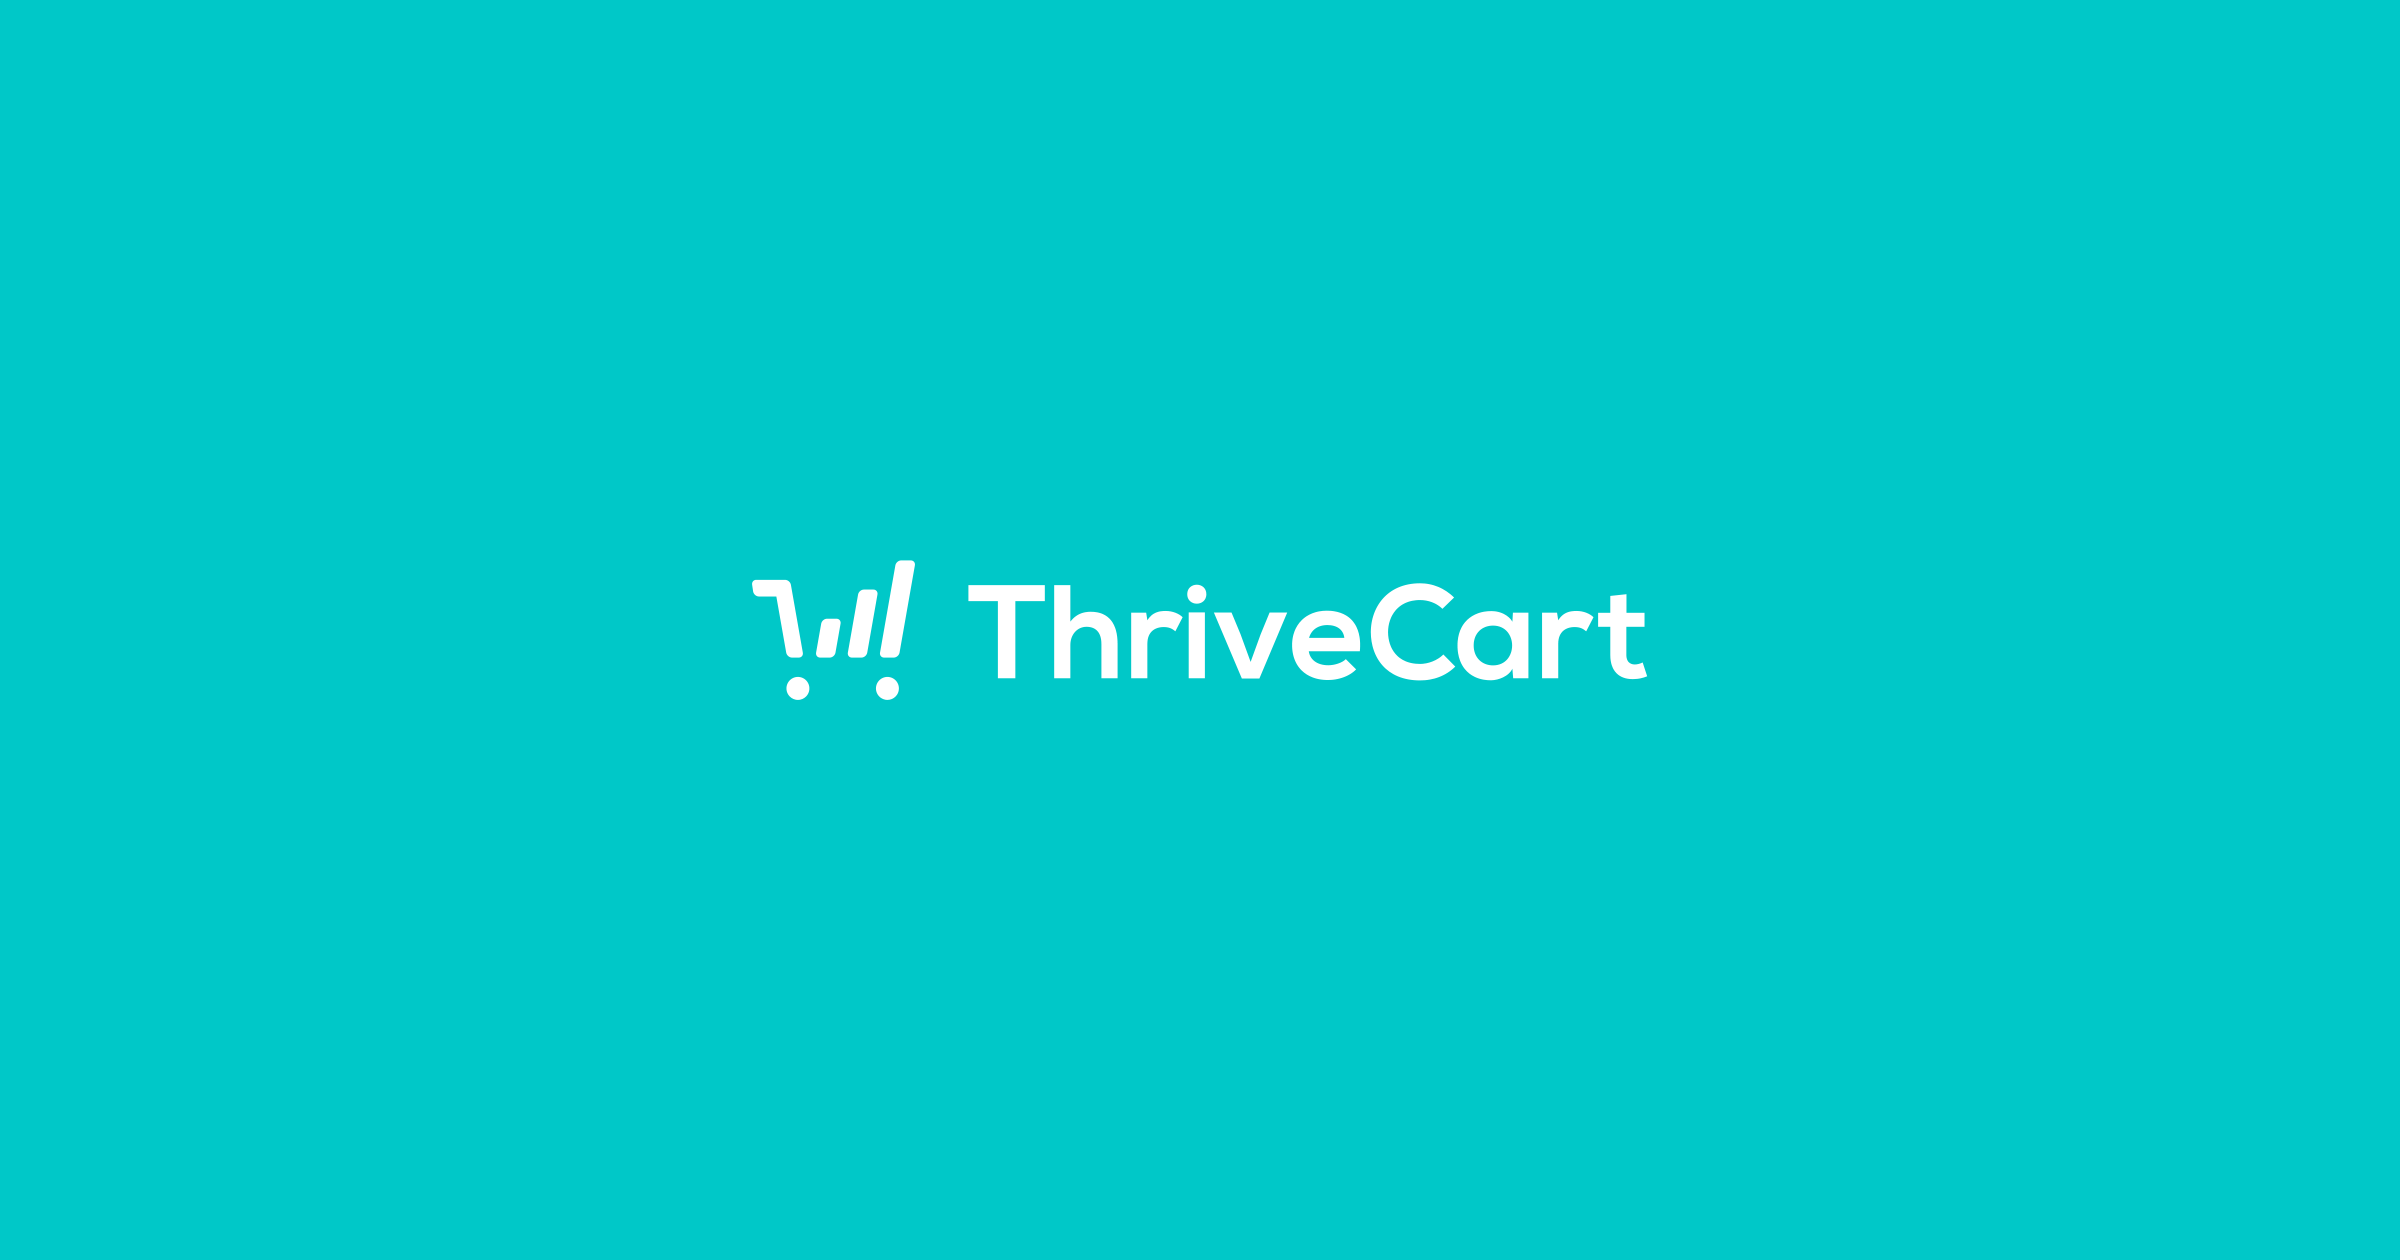 (c) Thrivecart.com